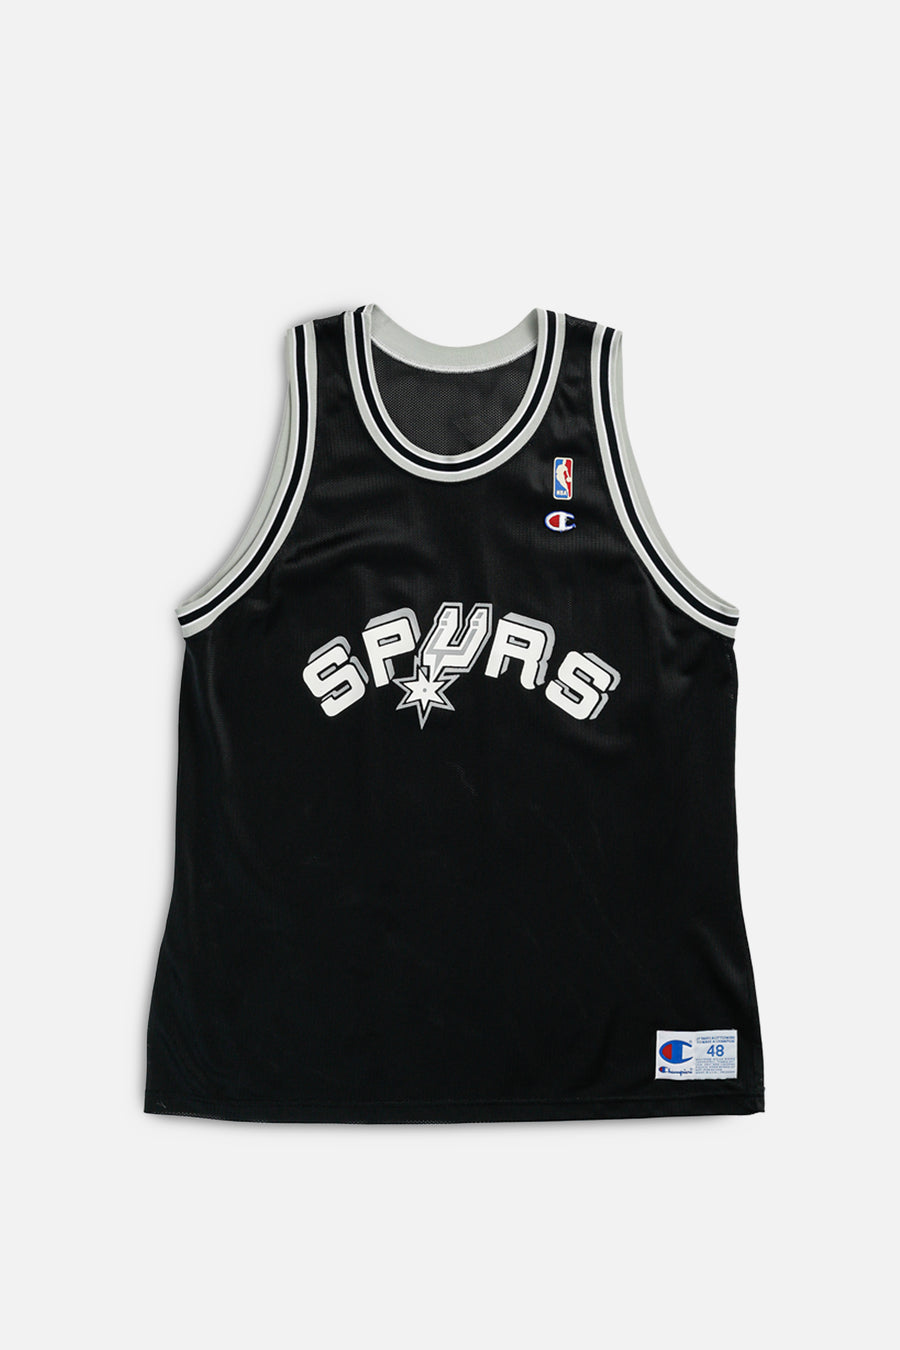 Vintage San Antonio Spurs NBA Jersey - XL